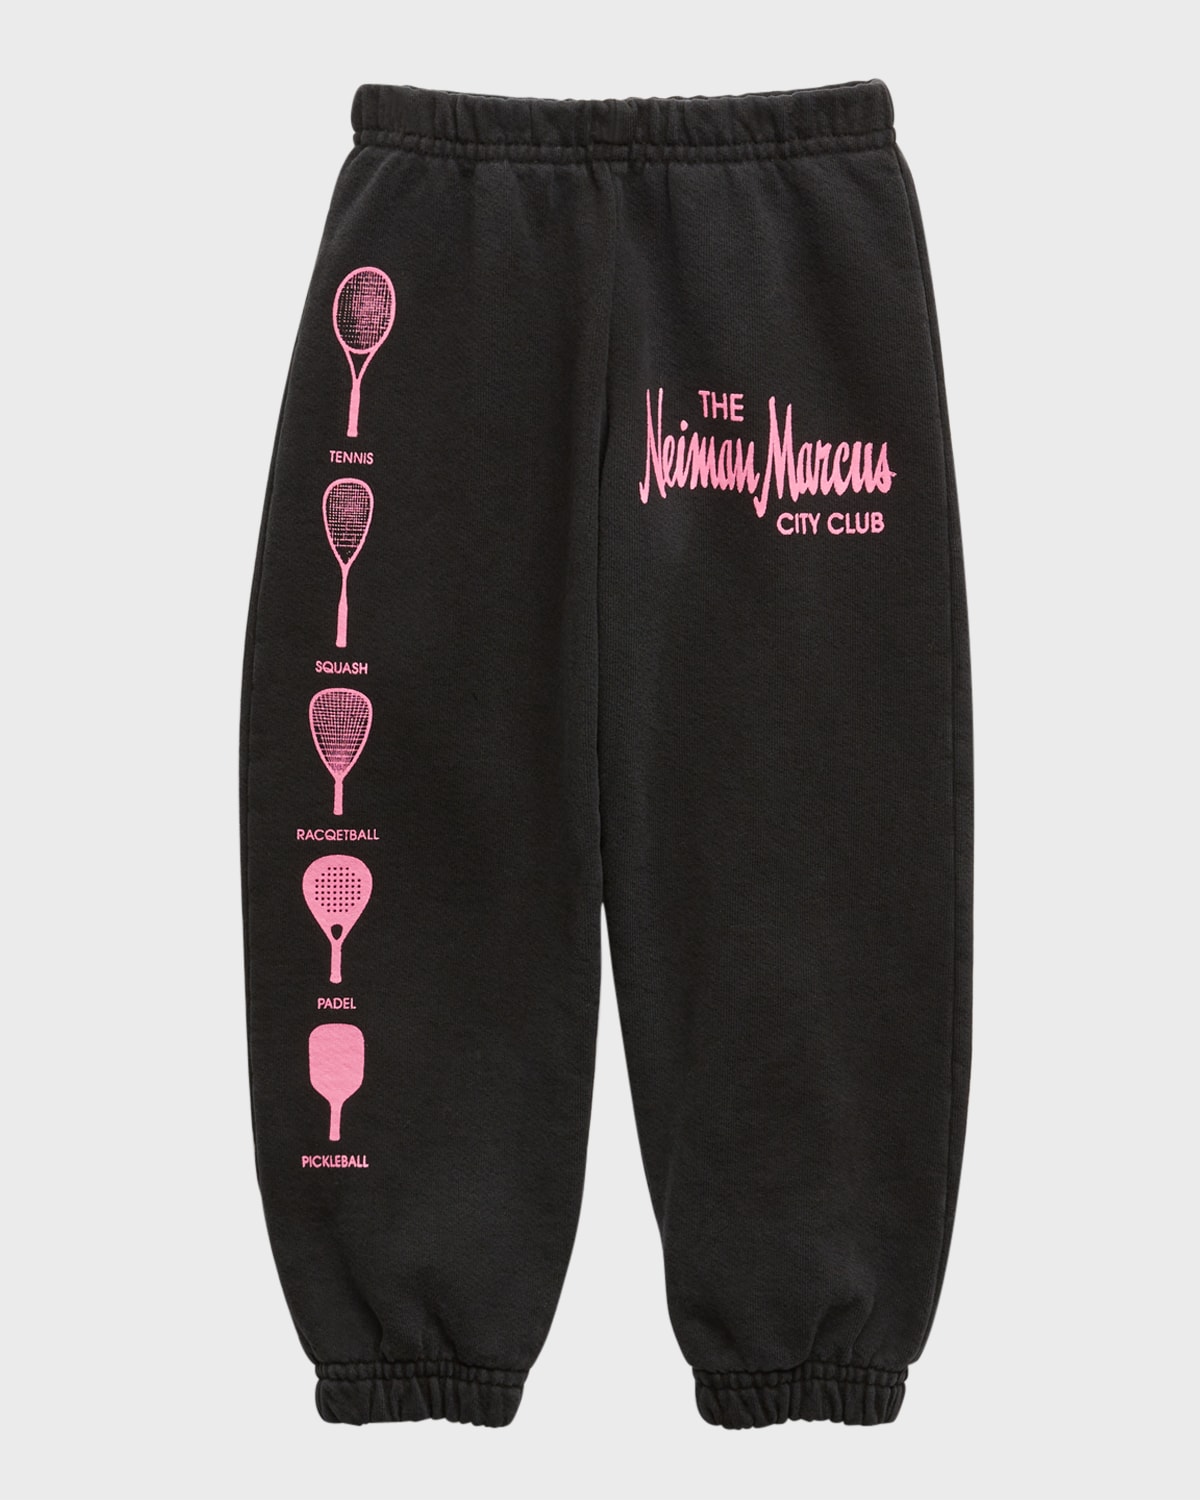 Girl's Neiman Marcus City Club Jogger Pants, Size 2-12